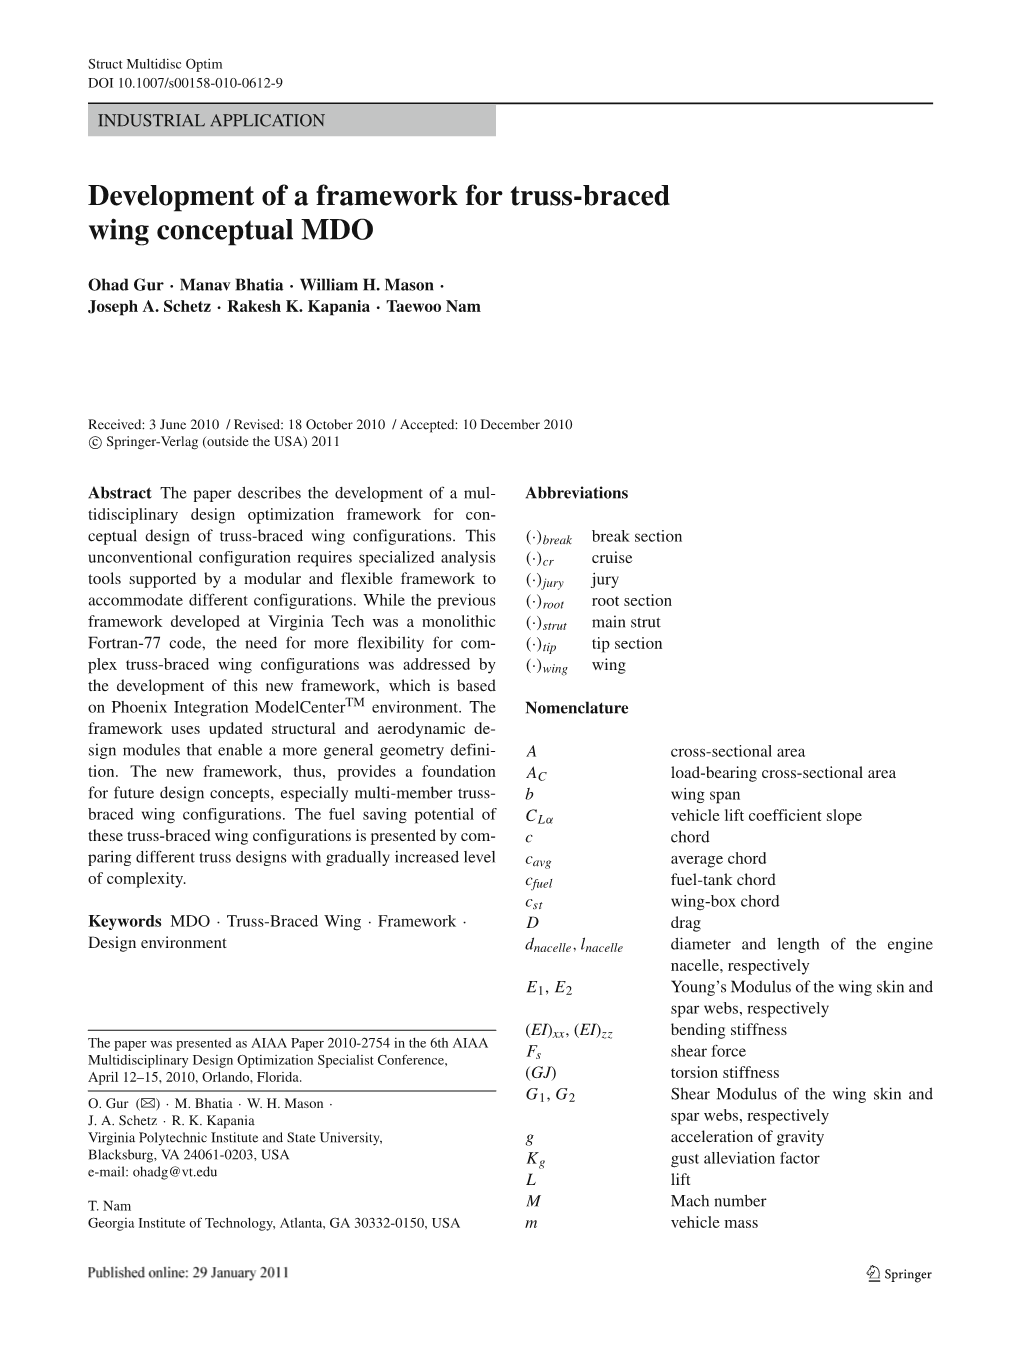 Development of a Framework for Truss-Braced Wing Conceptual MDO